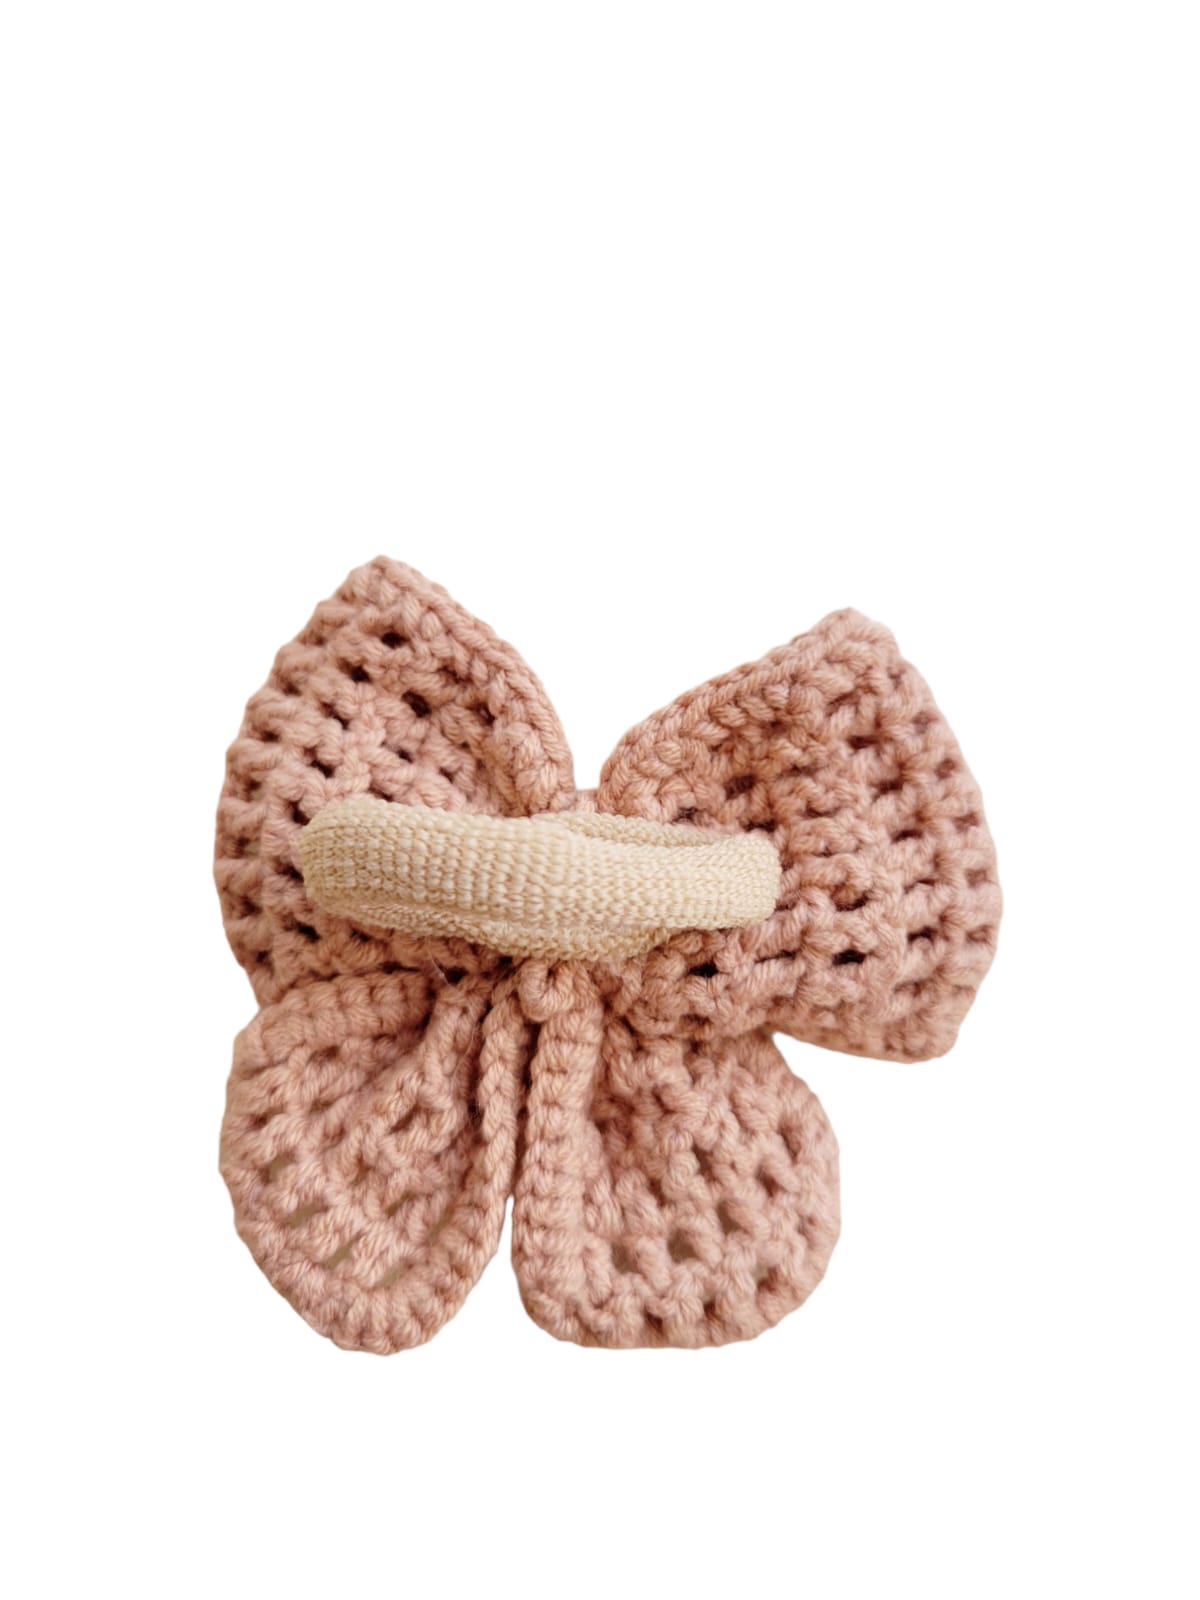 Crochet Trim Snap Hair Clips, Hair barrettes for kids